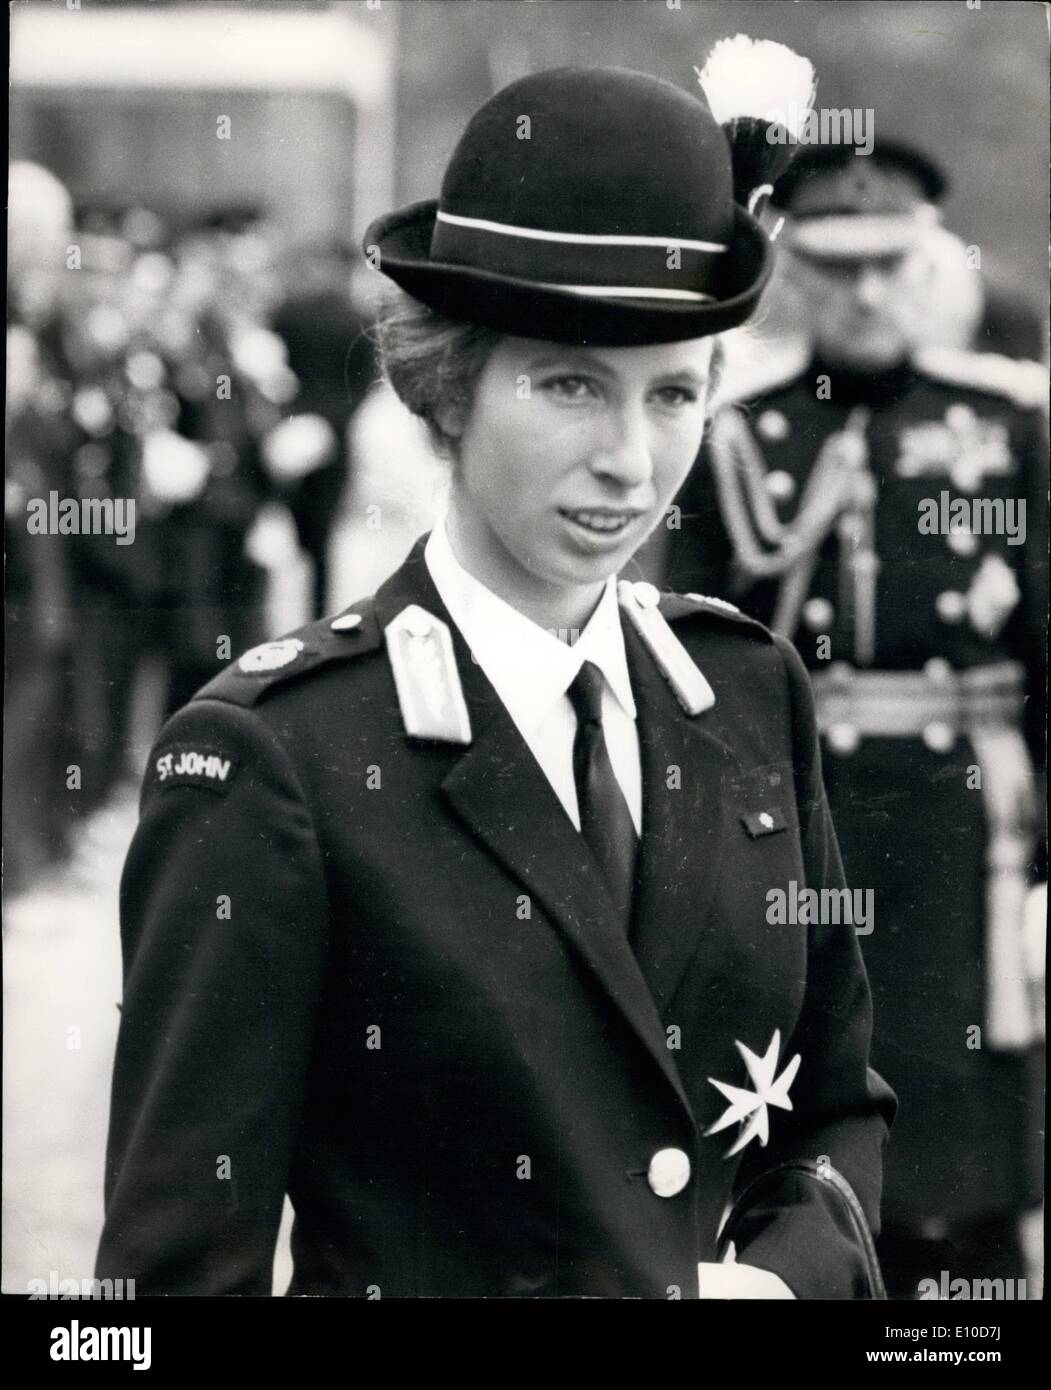 jul-07-1972-princess-anne-attends-st-john-ambulance-cadet-review-in-E10D7J.jpg